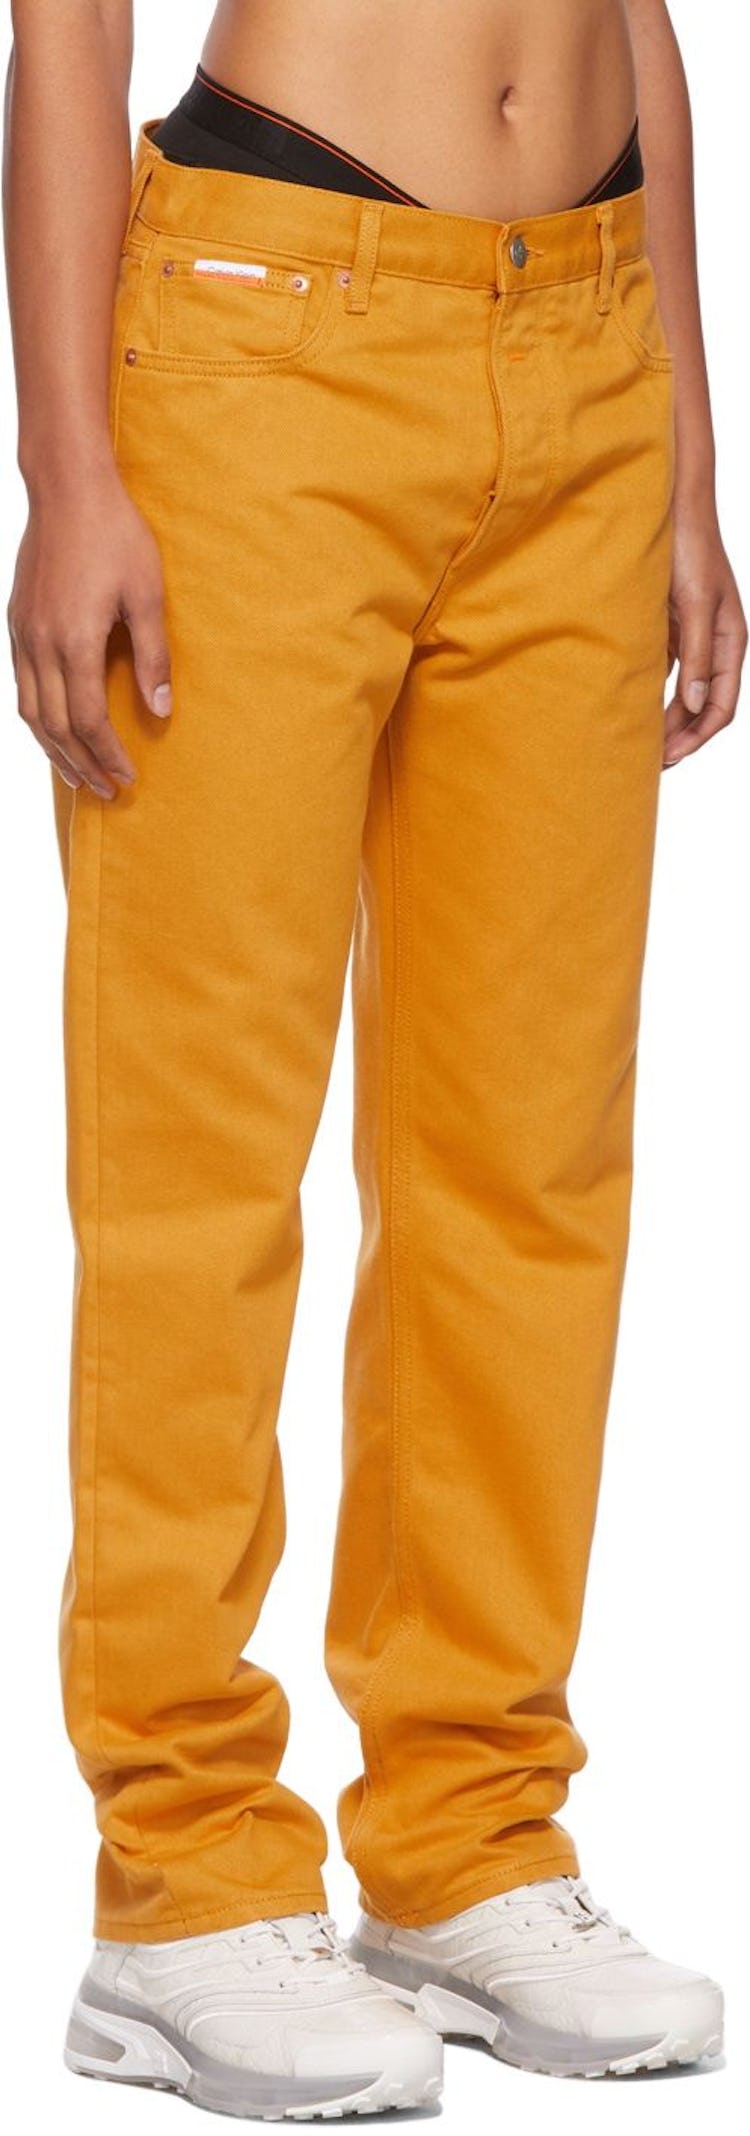 Orange Season 2 Straight-Leg Jeans: additional image